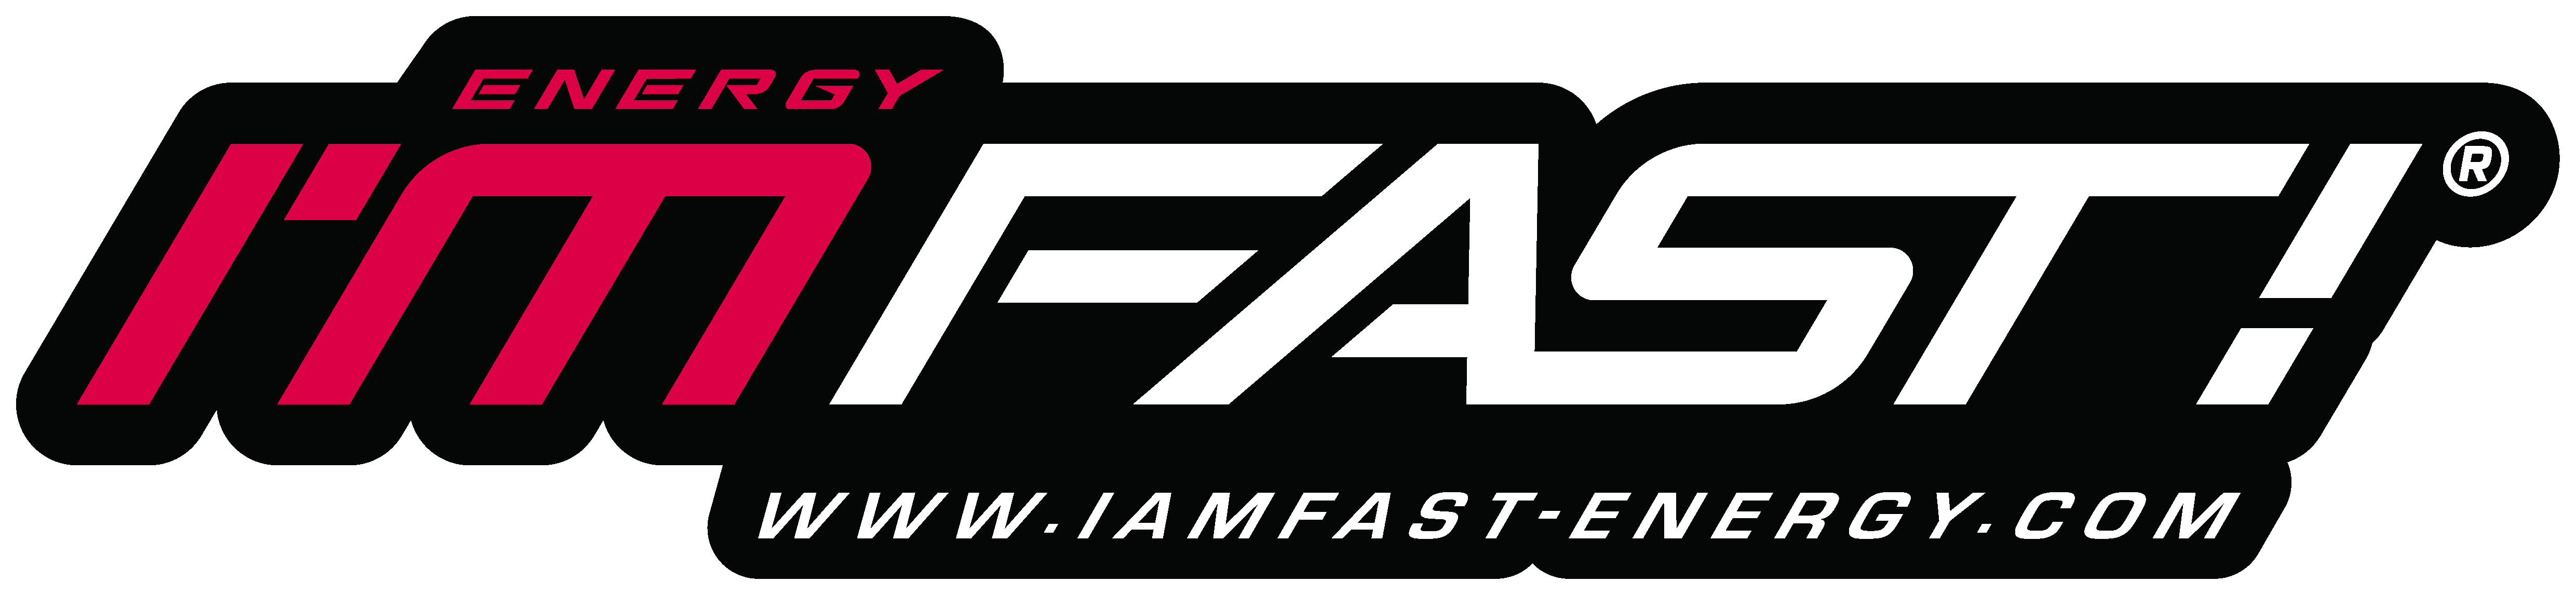 iamfast-energy-drink-logo